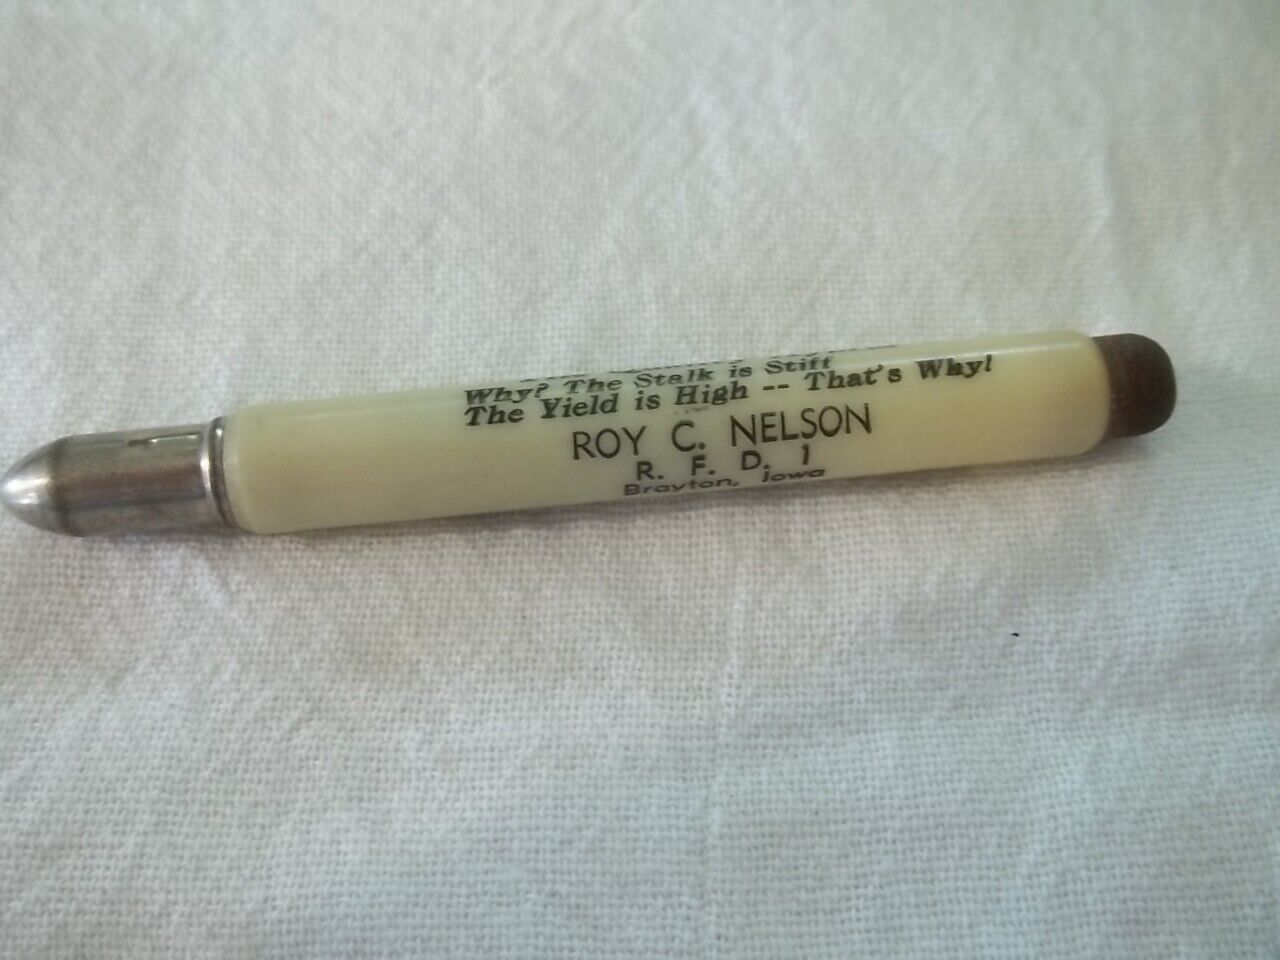  Pioneer Seed Corn Roy C Nelson RFD 1 Brayton Iowa Advertising Bullet Pencil #17